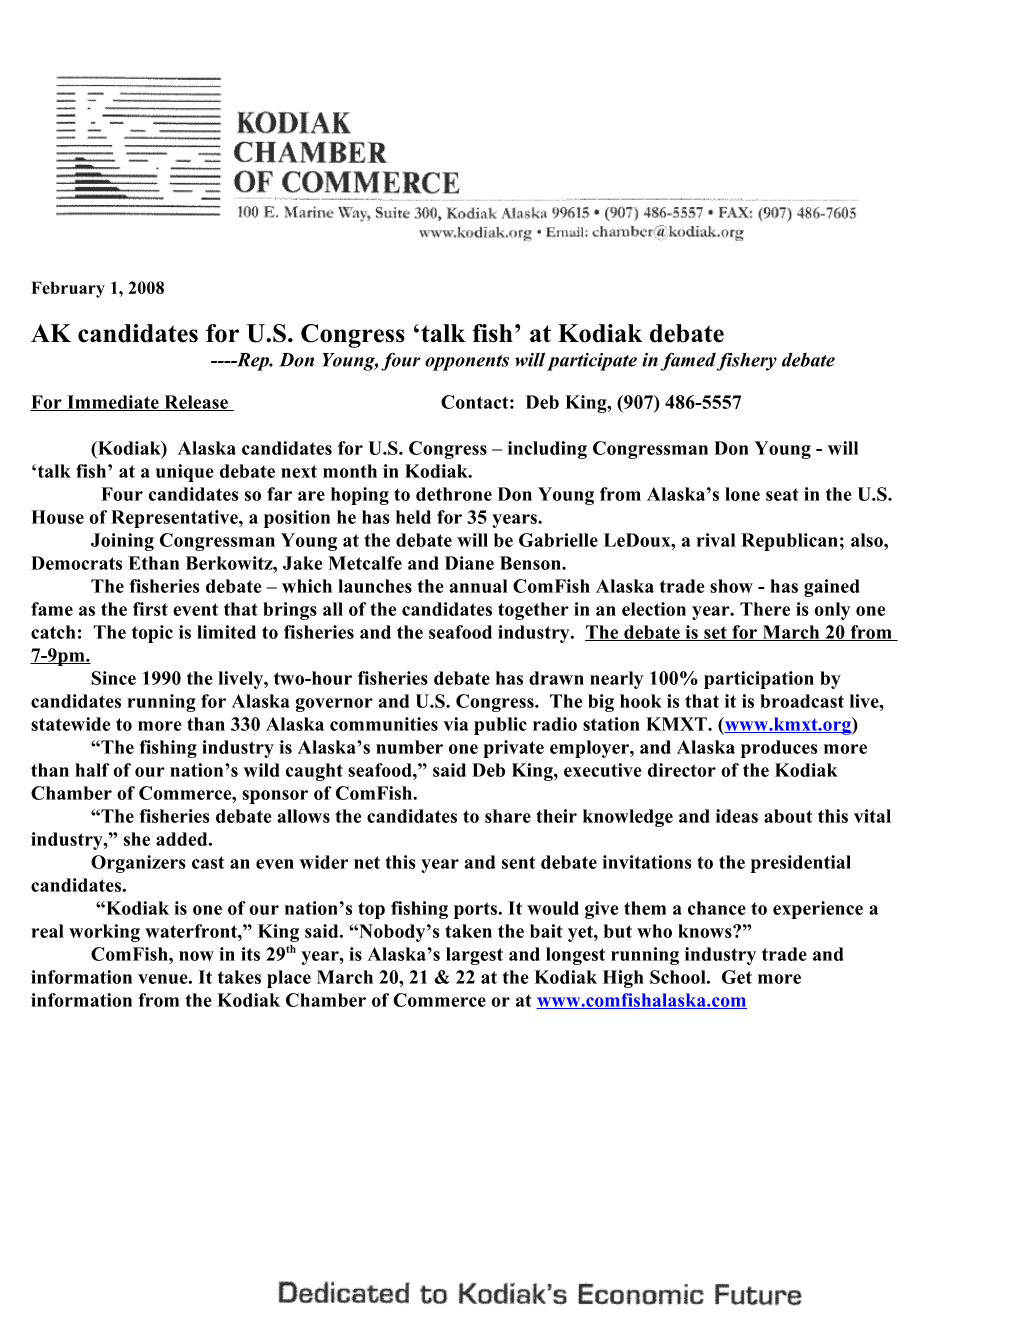 AK Candidates for U.S. Congress Talk Fish at Kodiak Debate